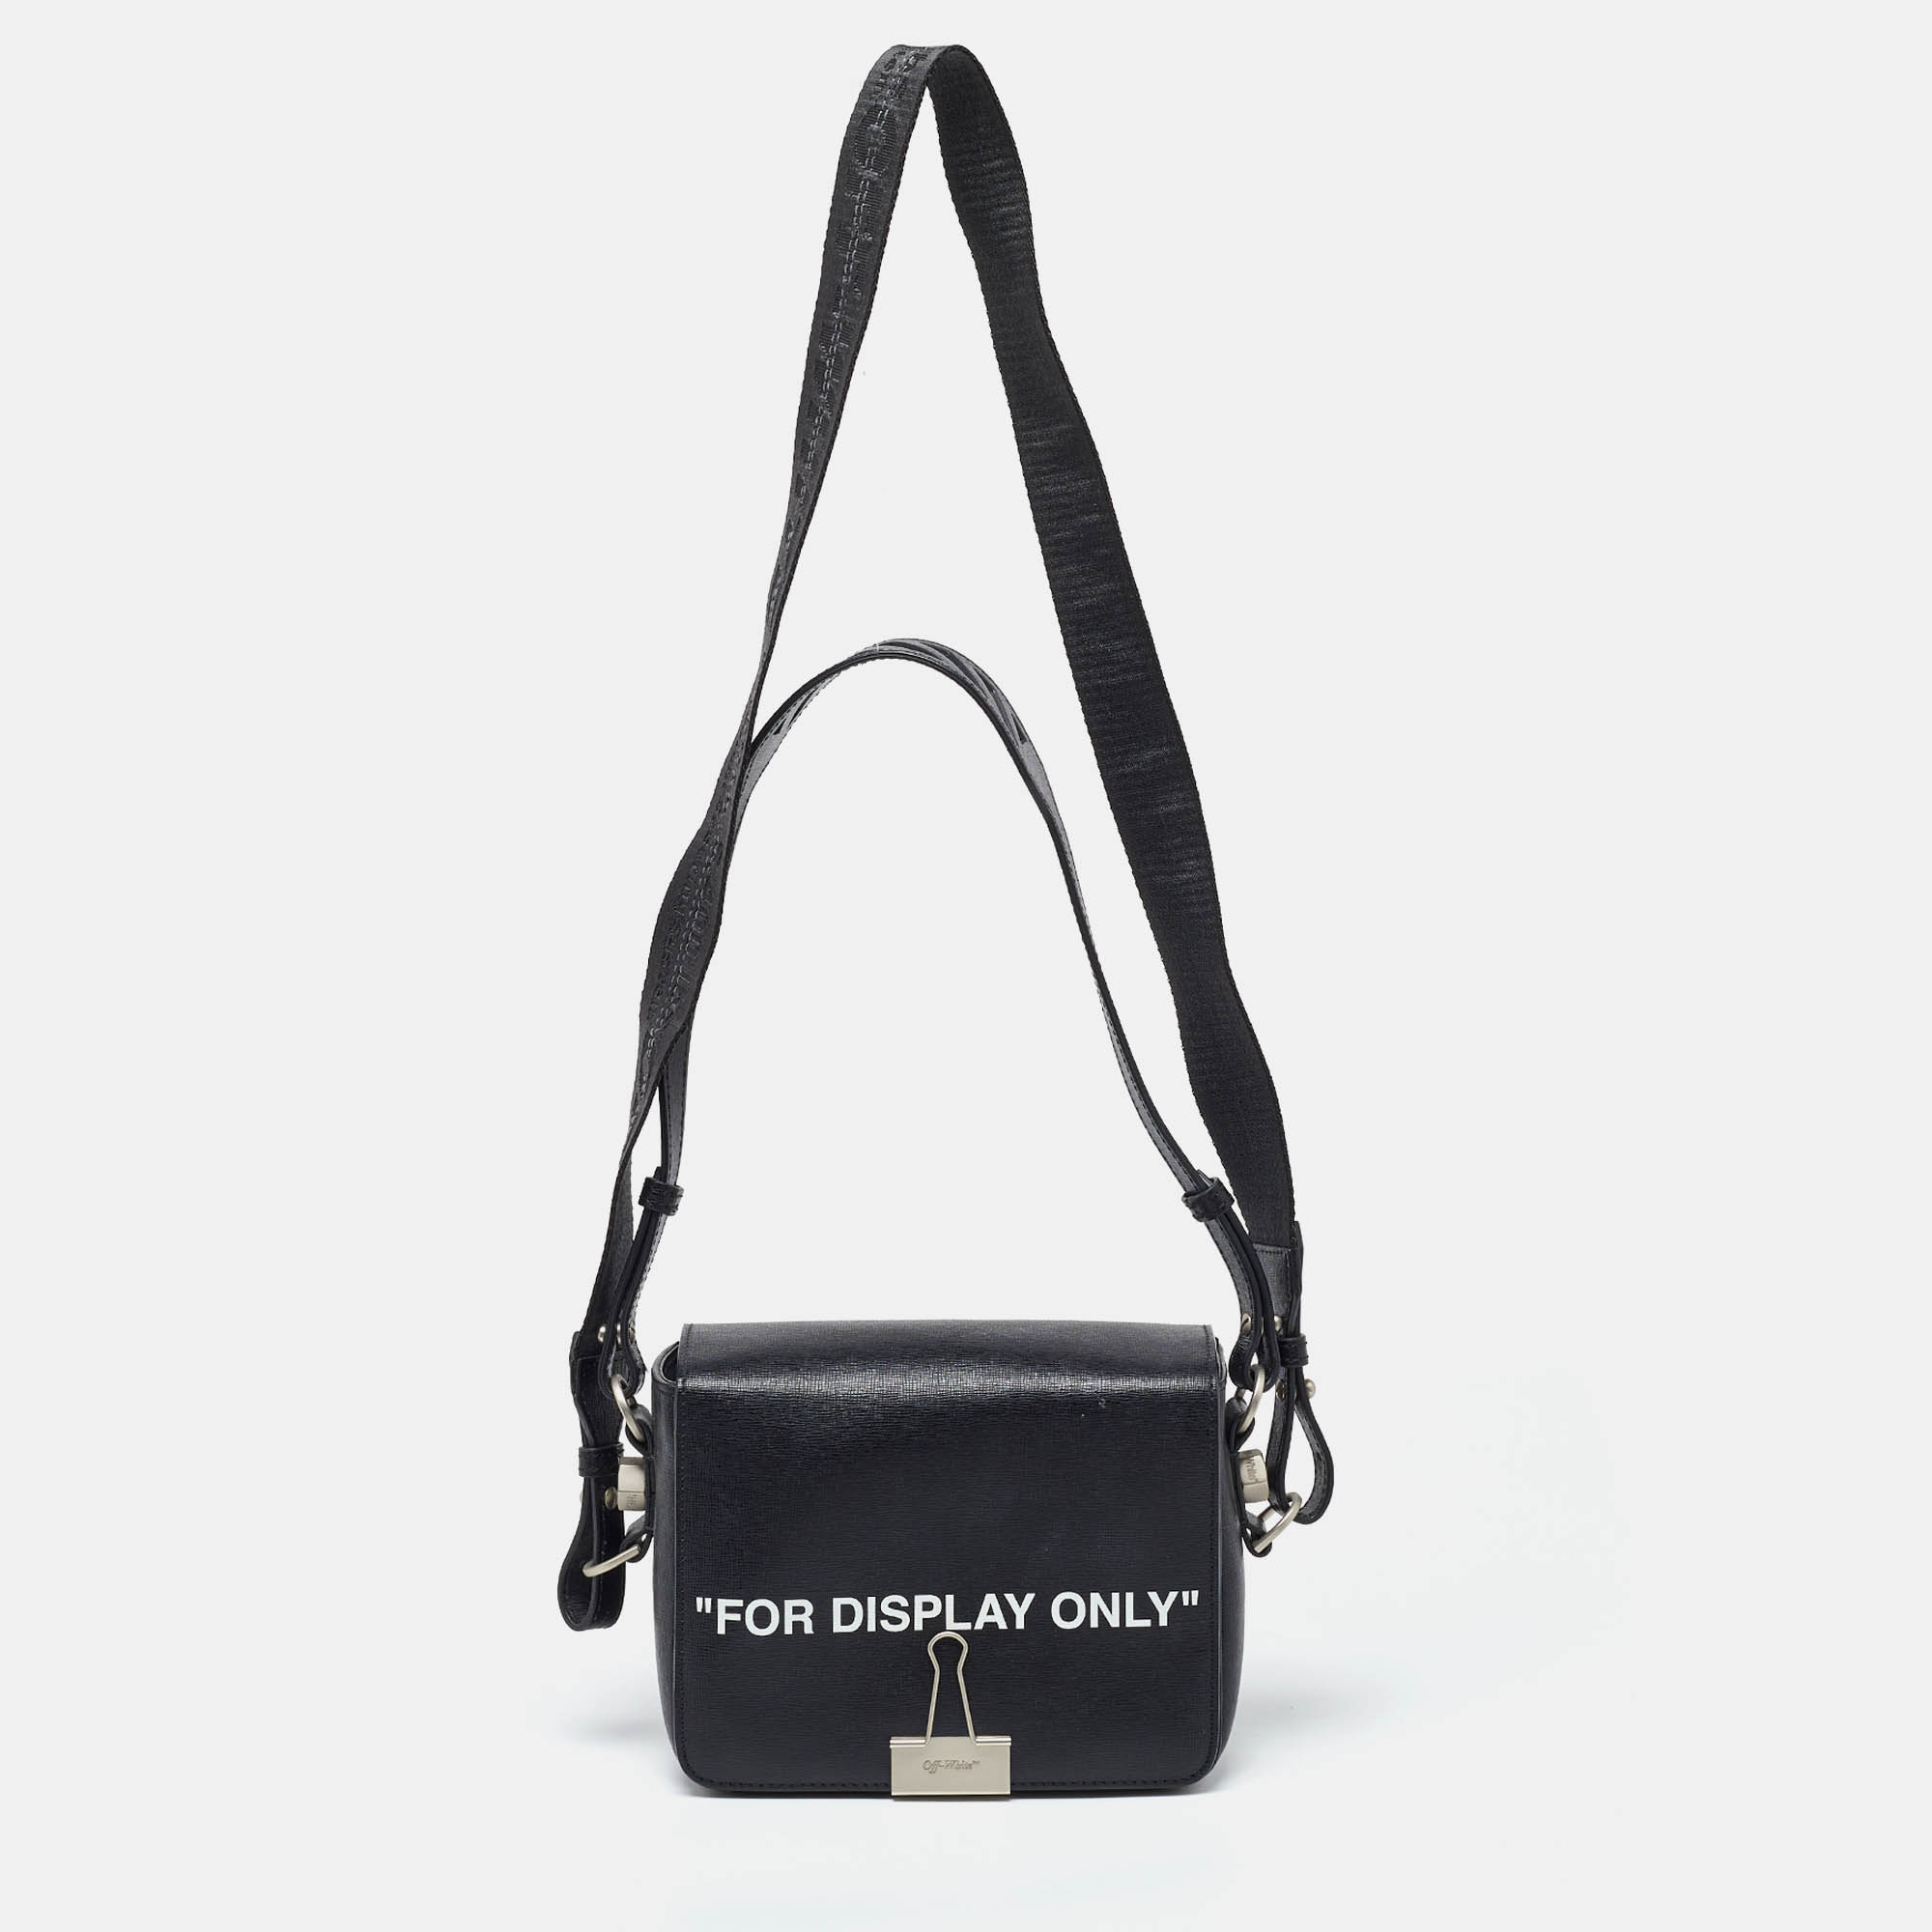 Off-white black/white leather mini binder clip crossbody bag